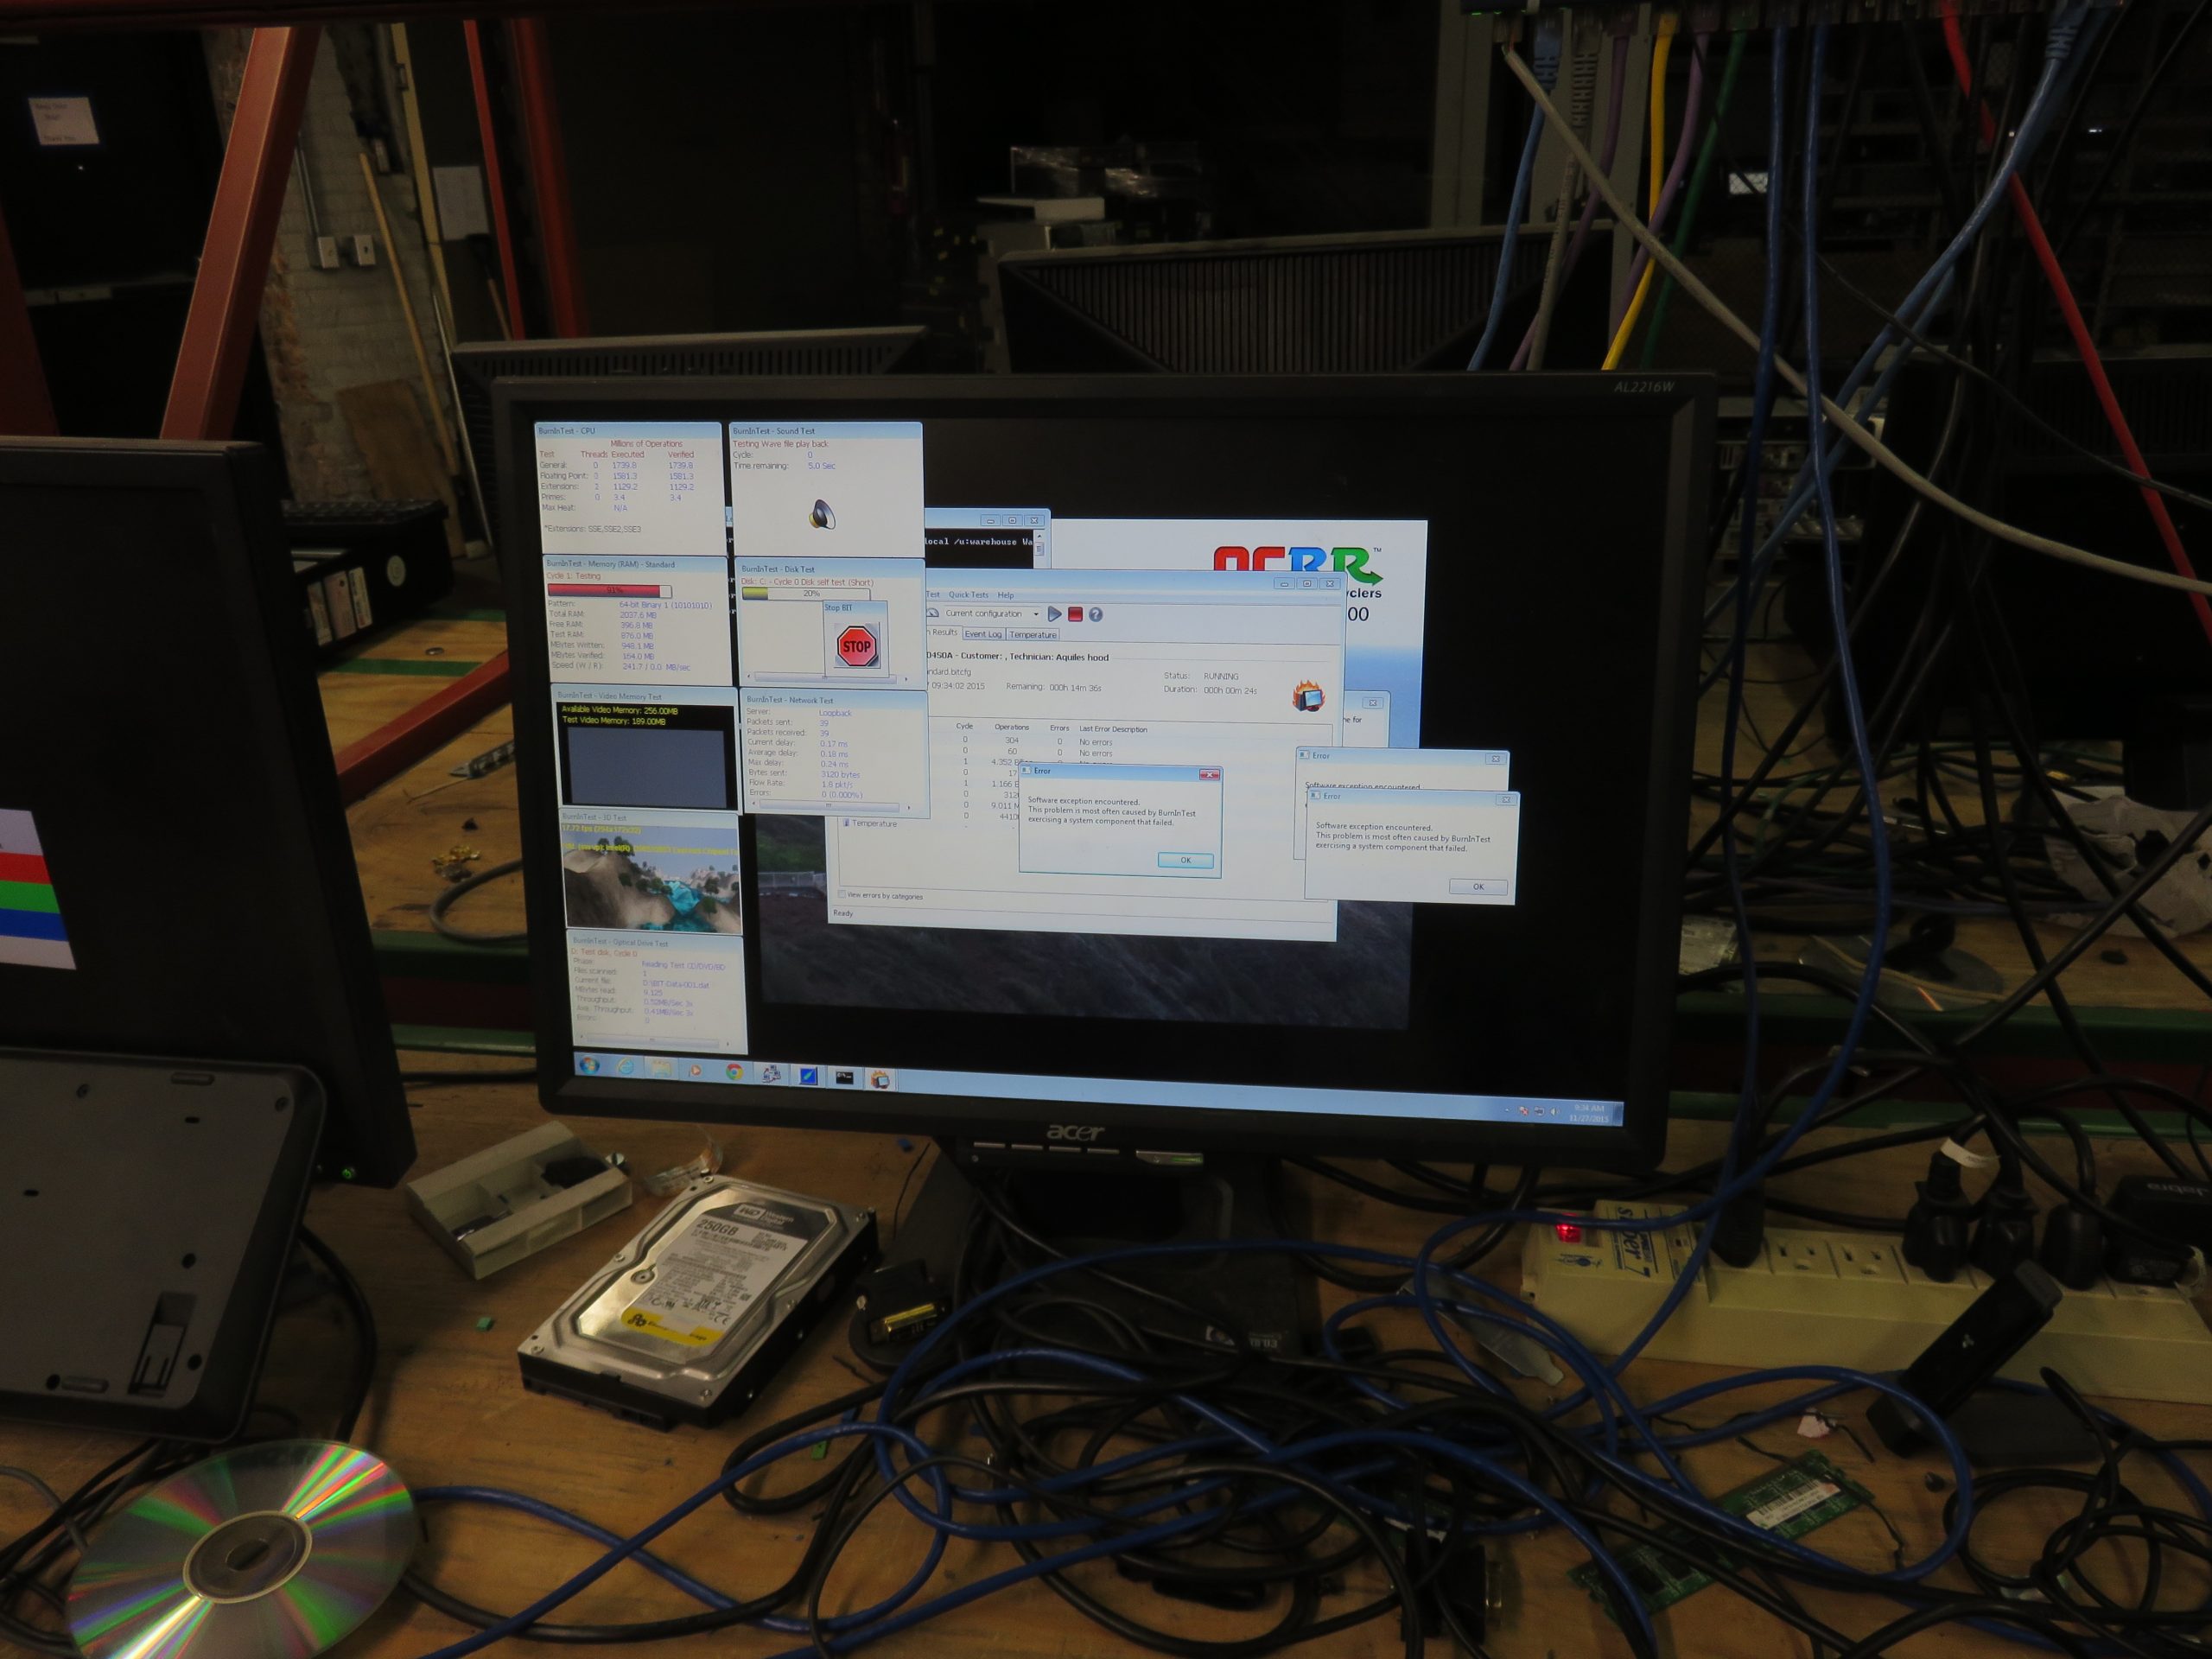 Computer monitor showing usage data